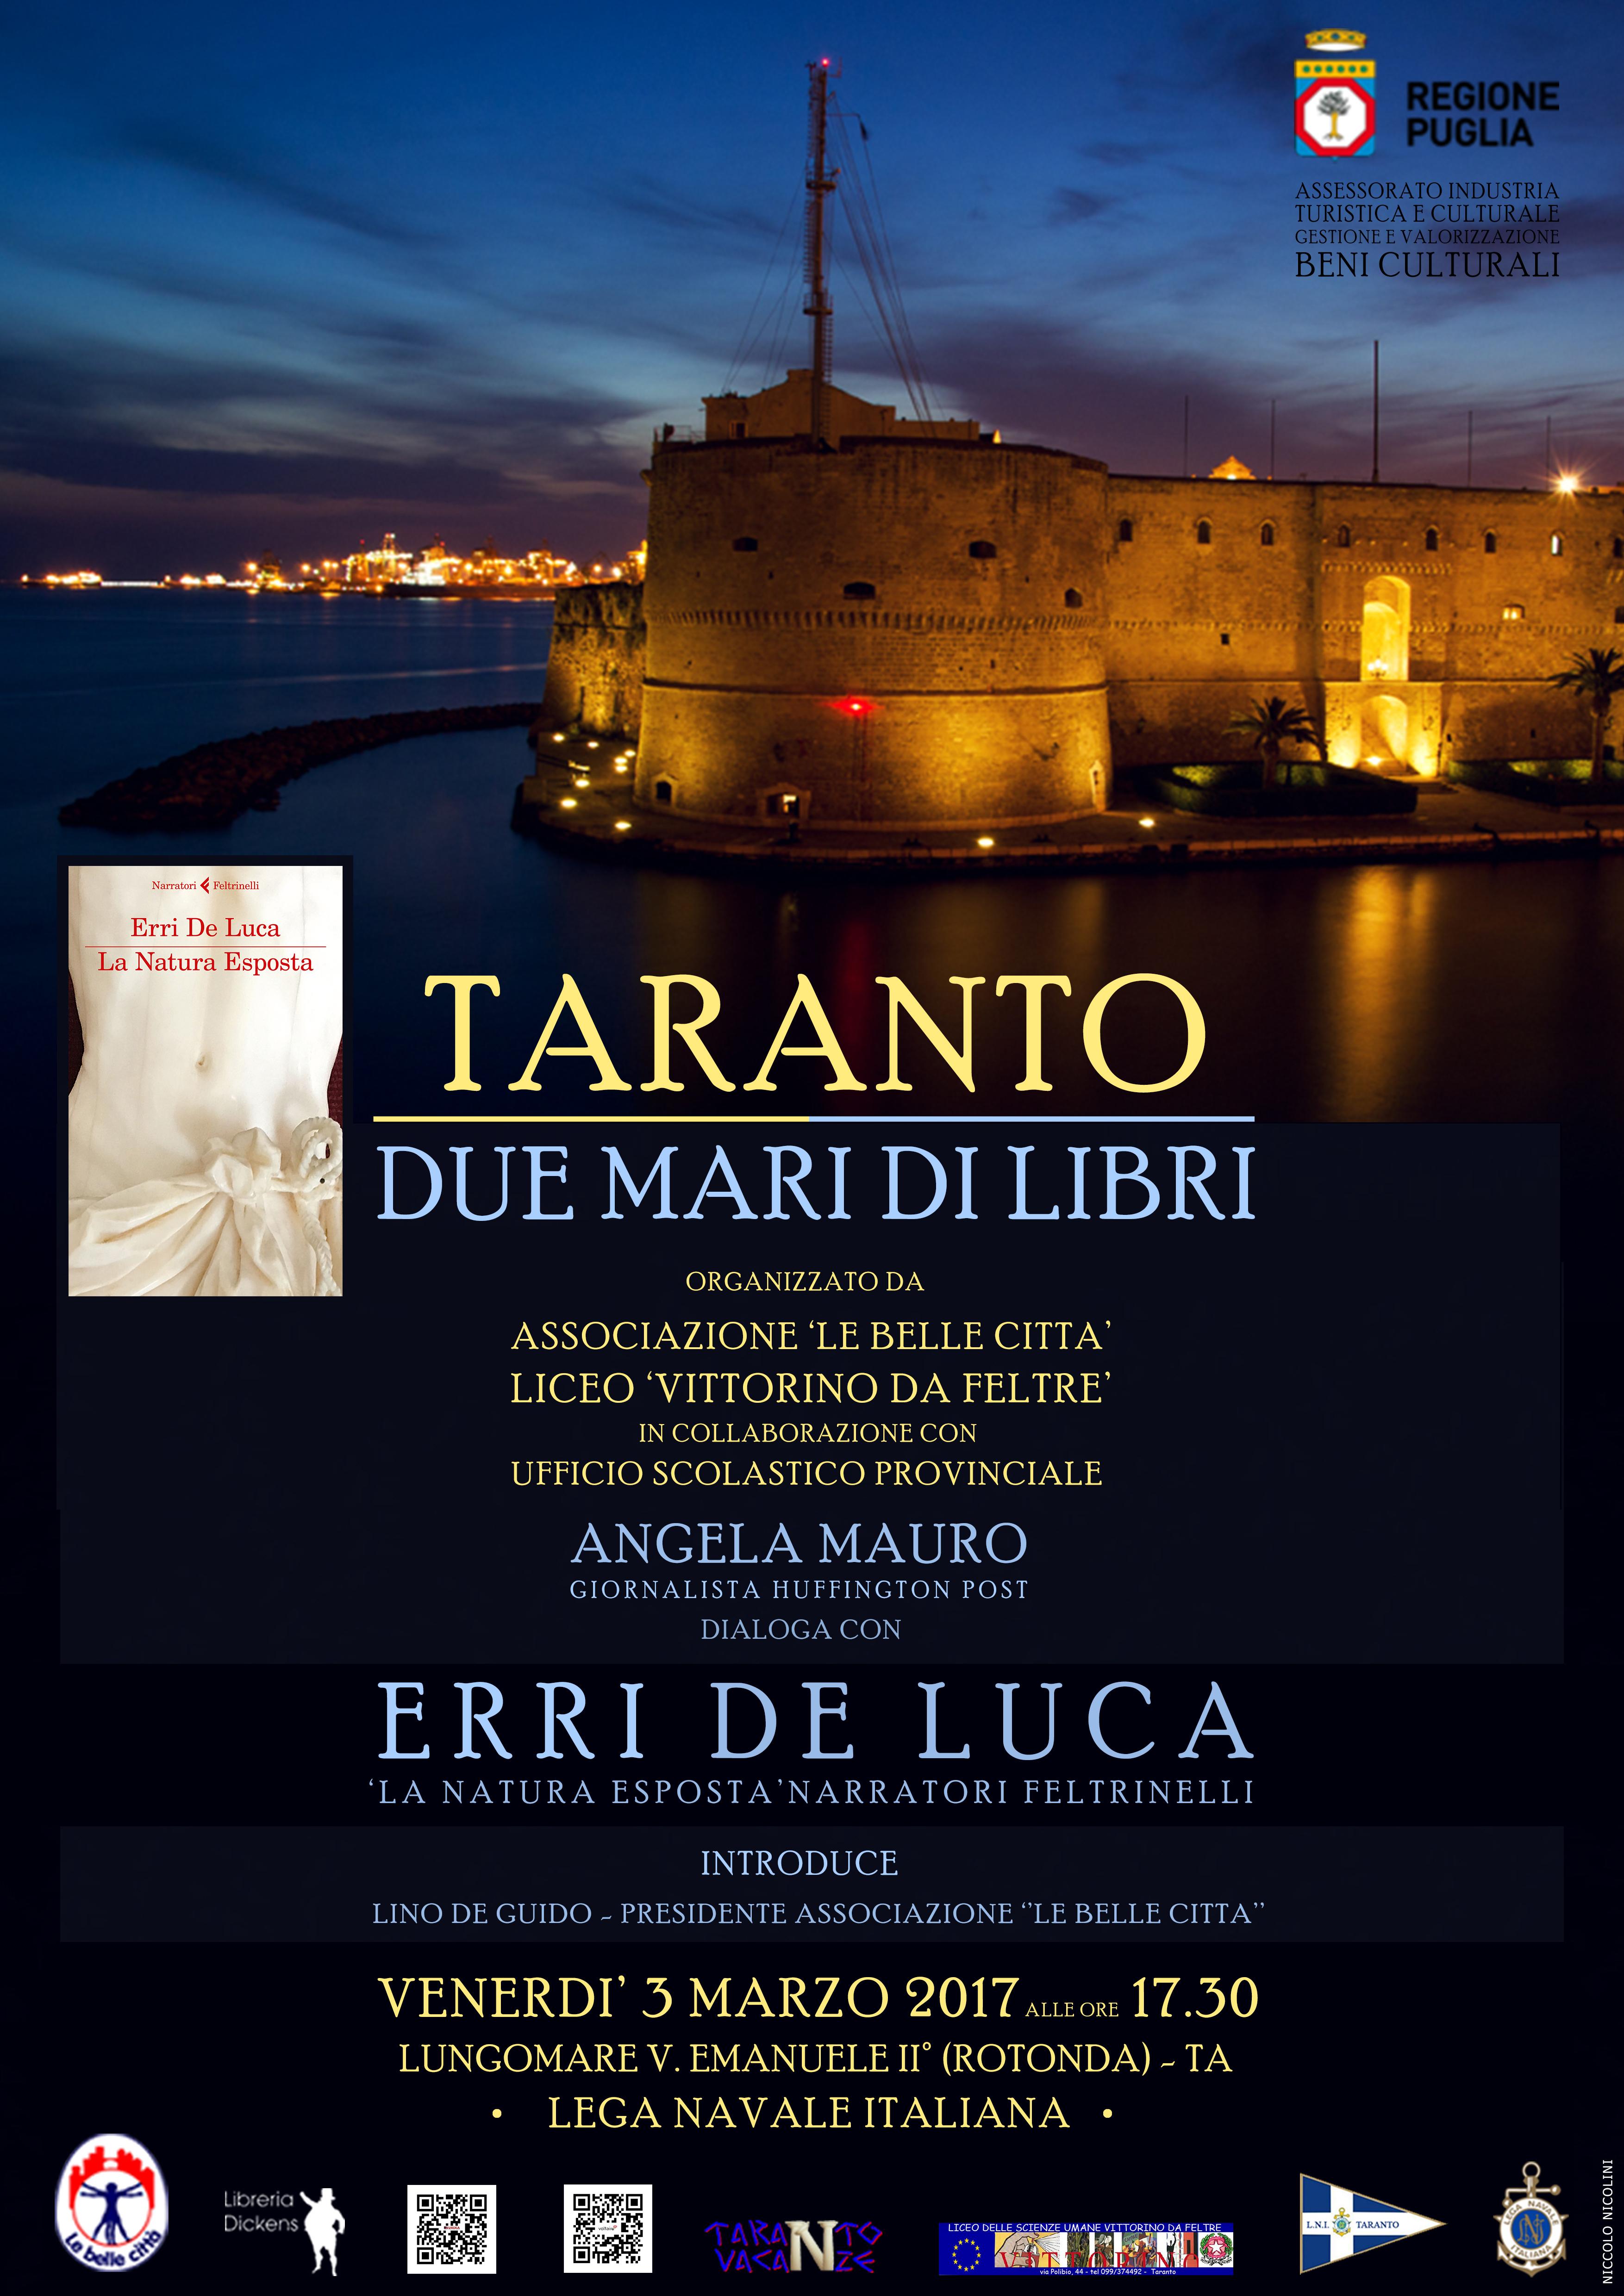 TARANTO. “Erri De Luca a Taranto due mari di libri”